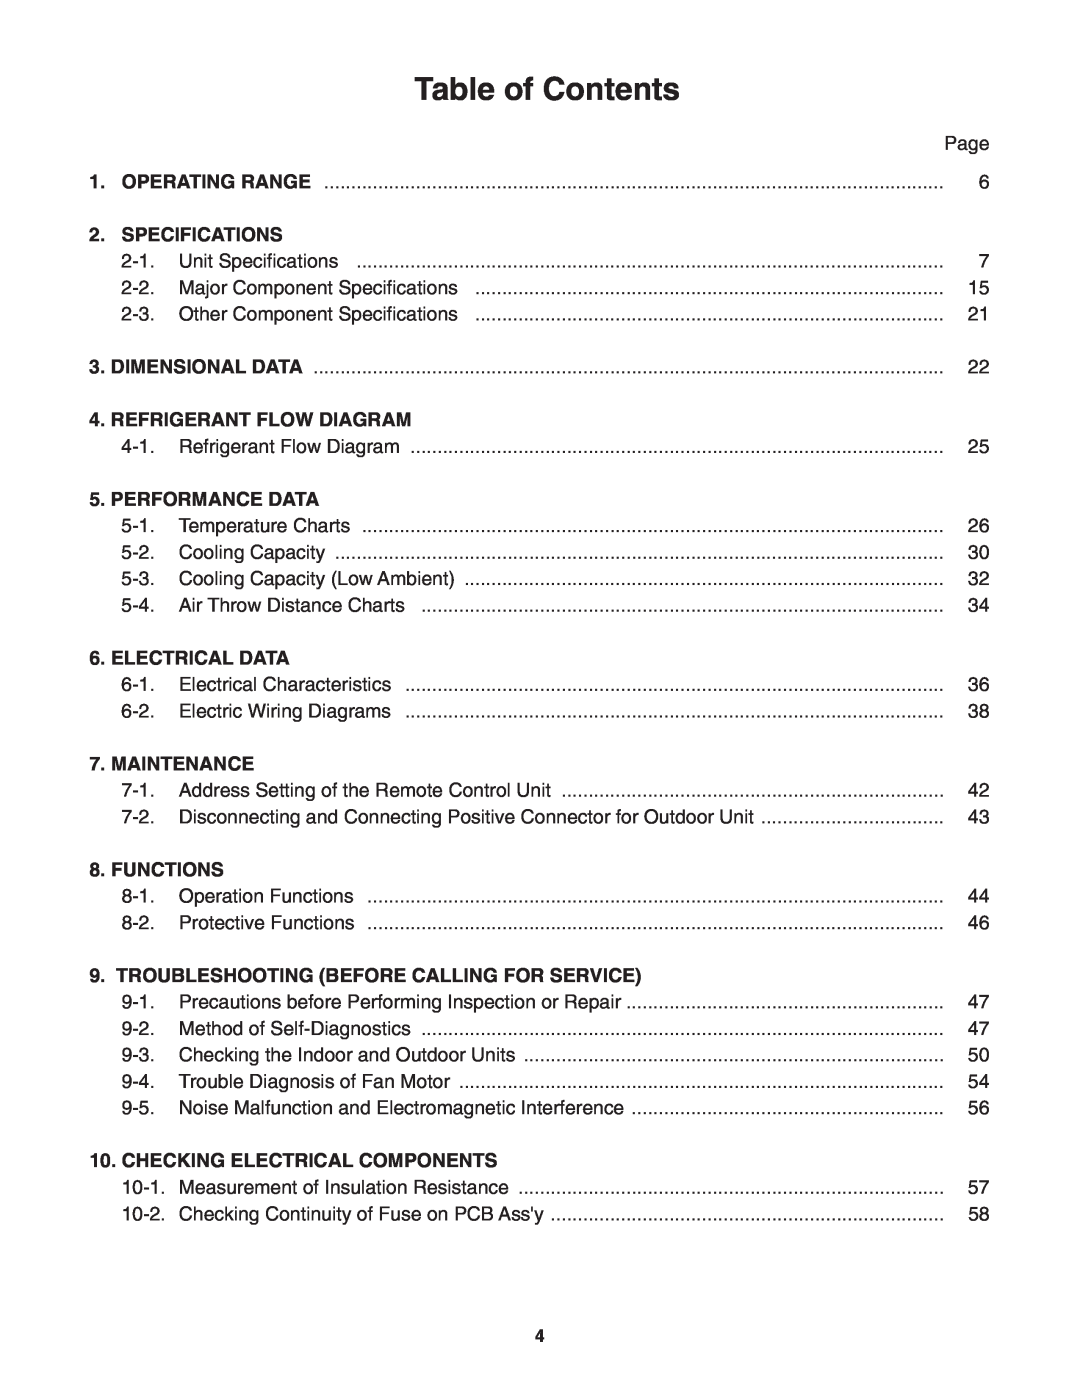 Panasonic CS-KS24NKU Table of Contents, Specifications, Refrigerant Flow Diagram, Performance Data, Electrical Data 